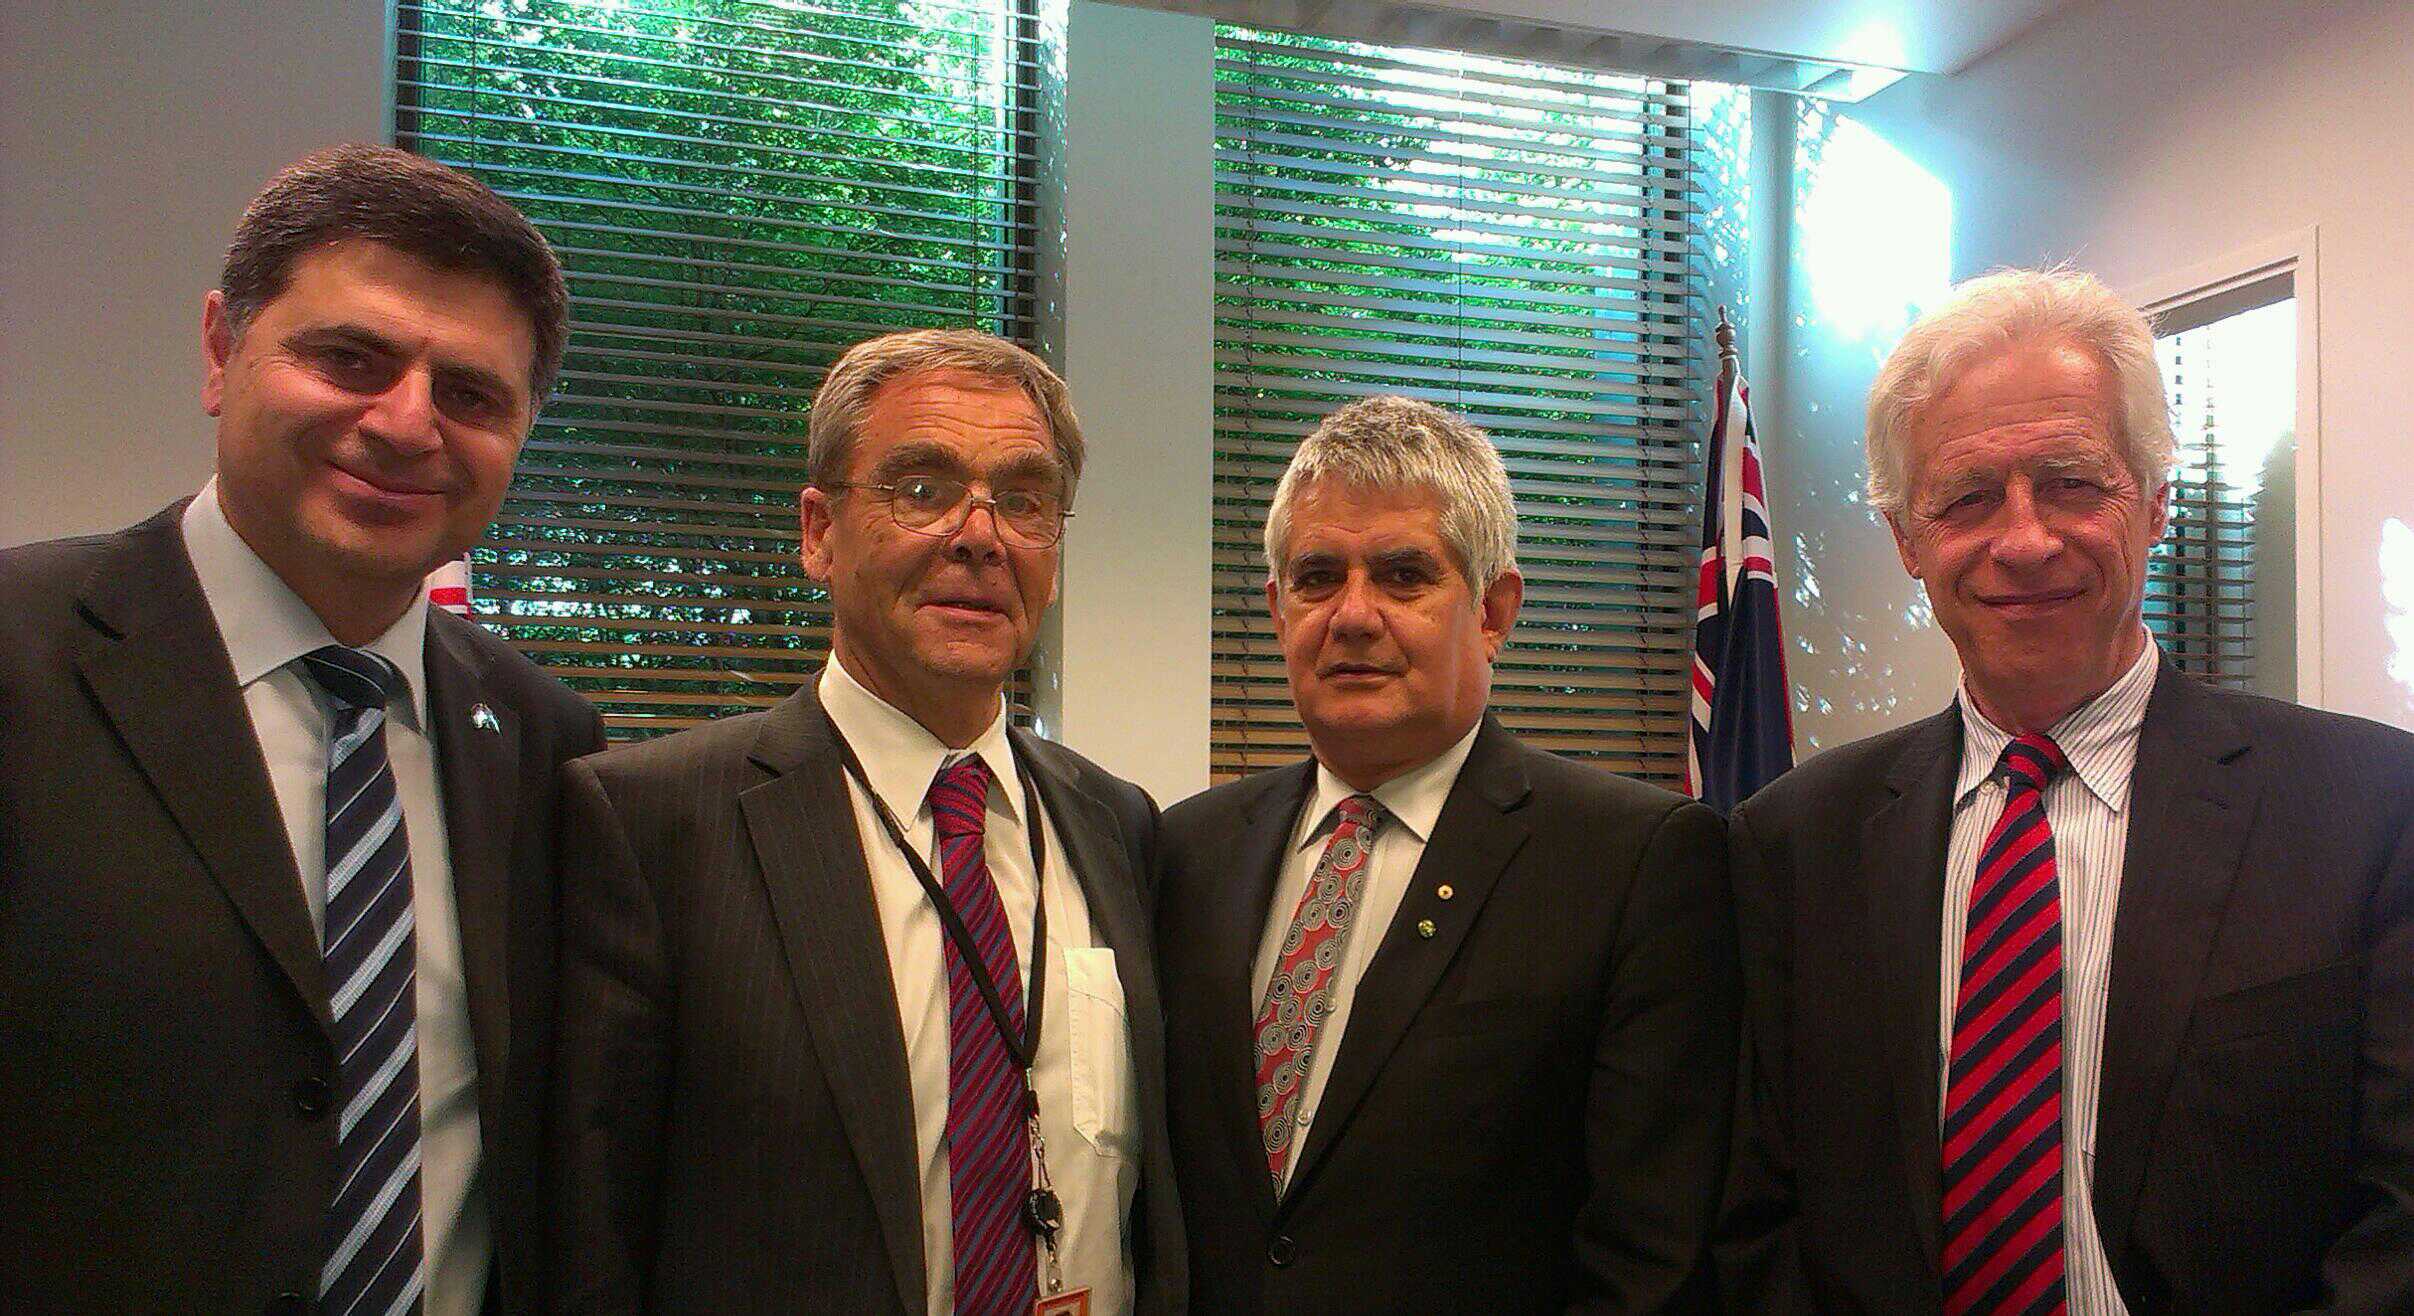 APAN delegation meeting with Ken Wyatt MP